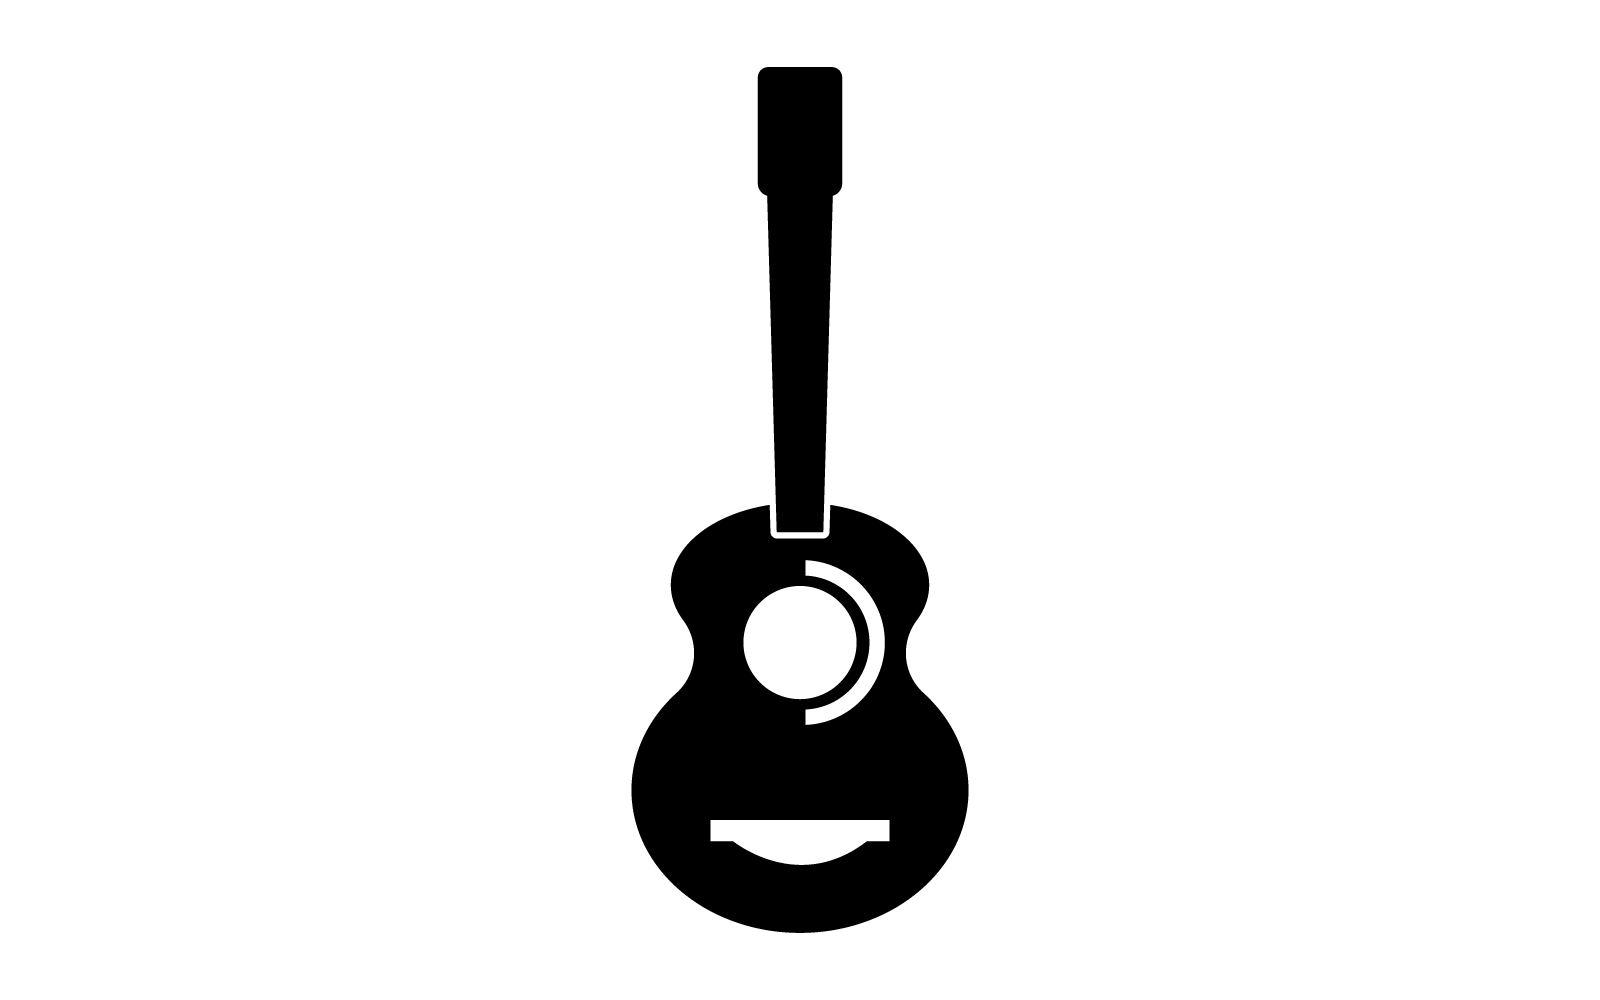 Guitar design logo illustration template